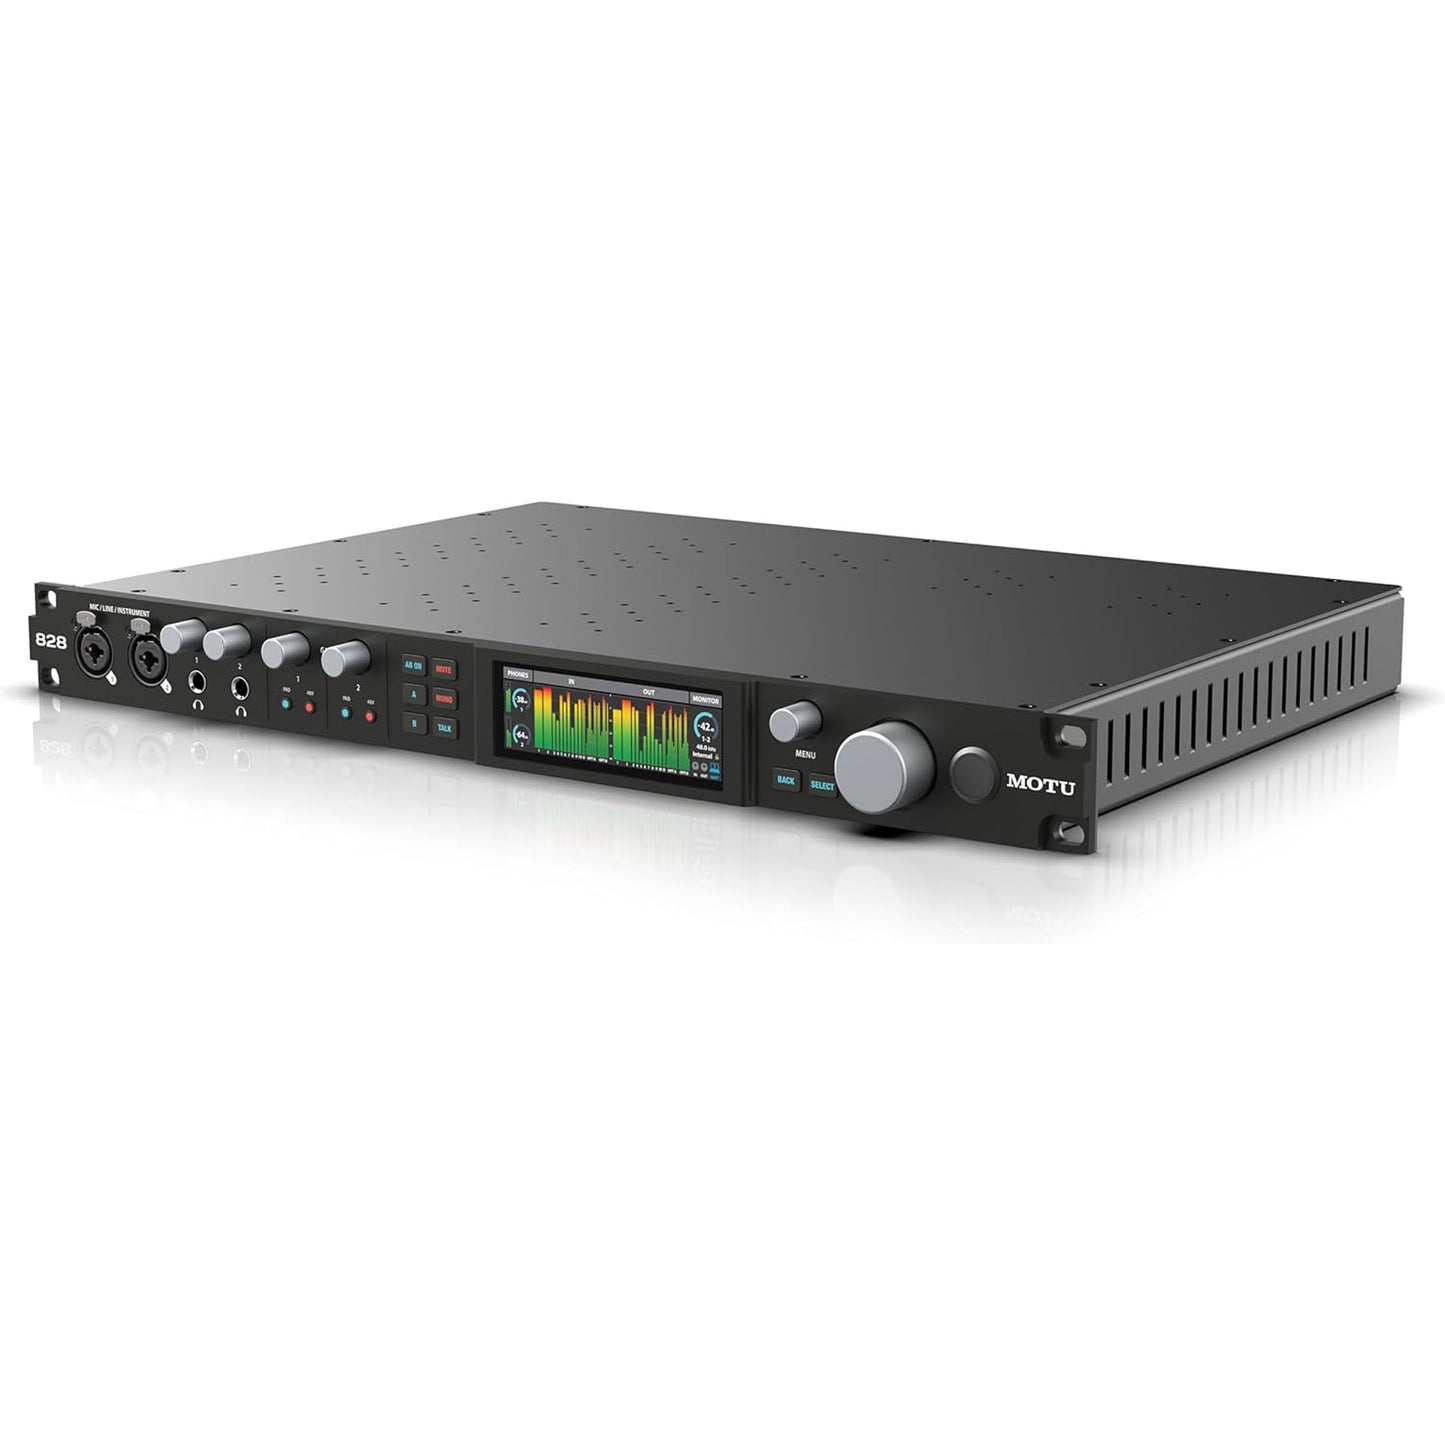 Motu 828 28 x 32 USB3 Audio Interface